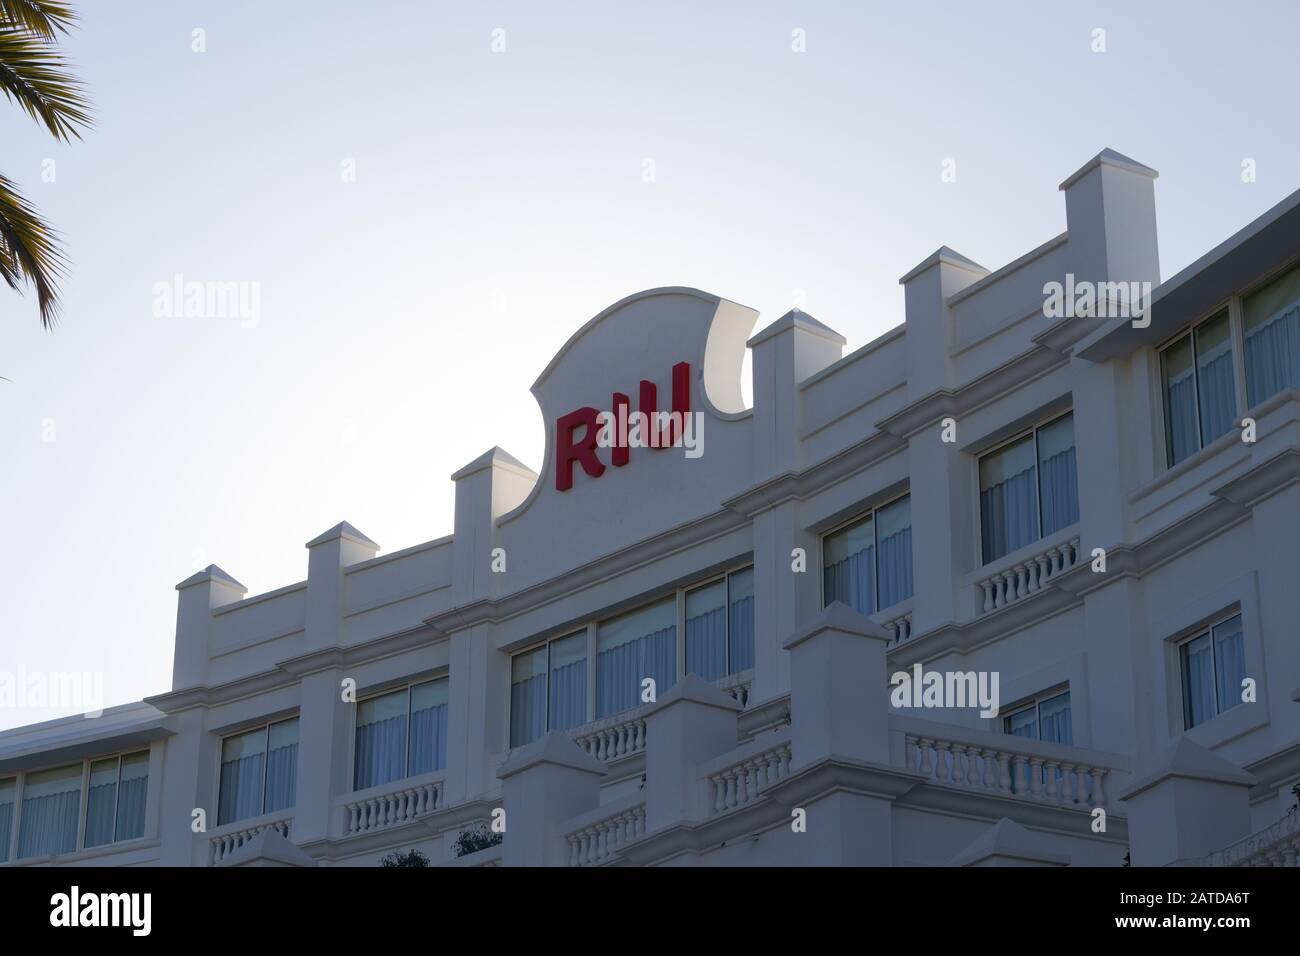 RIU hotel brand name agains clear blue sky Stock Photo